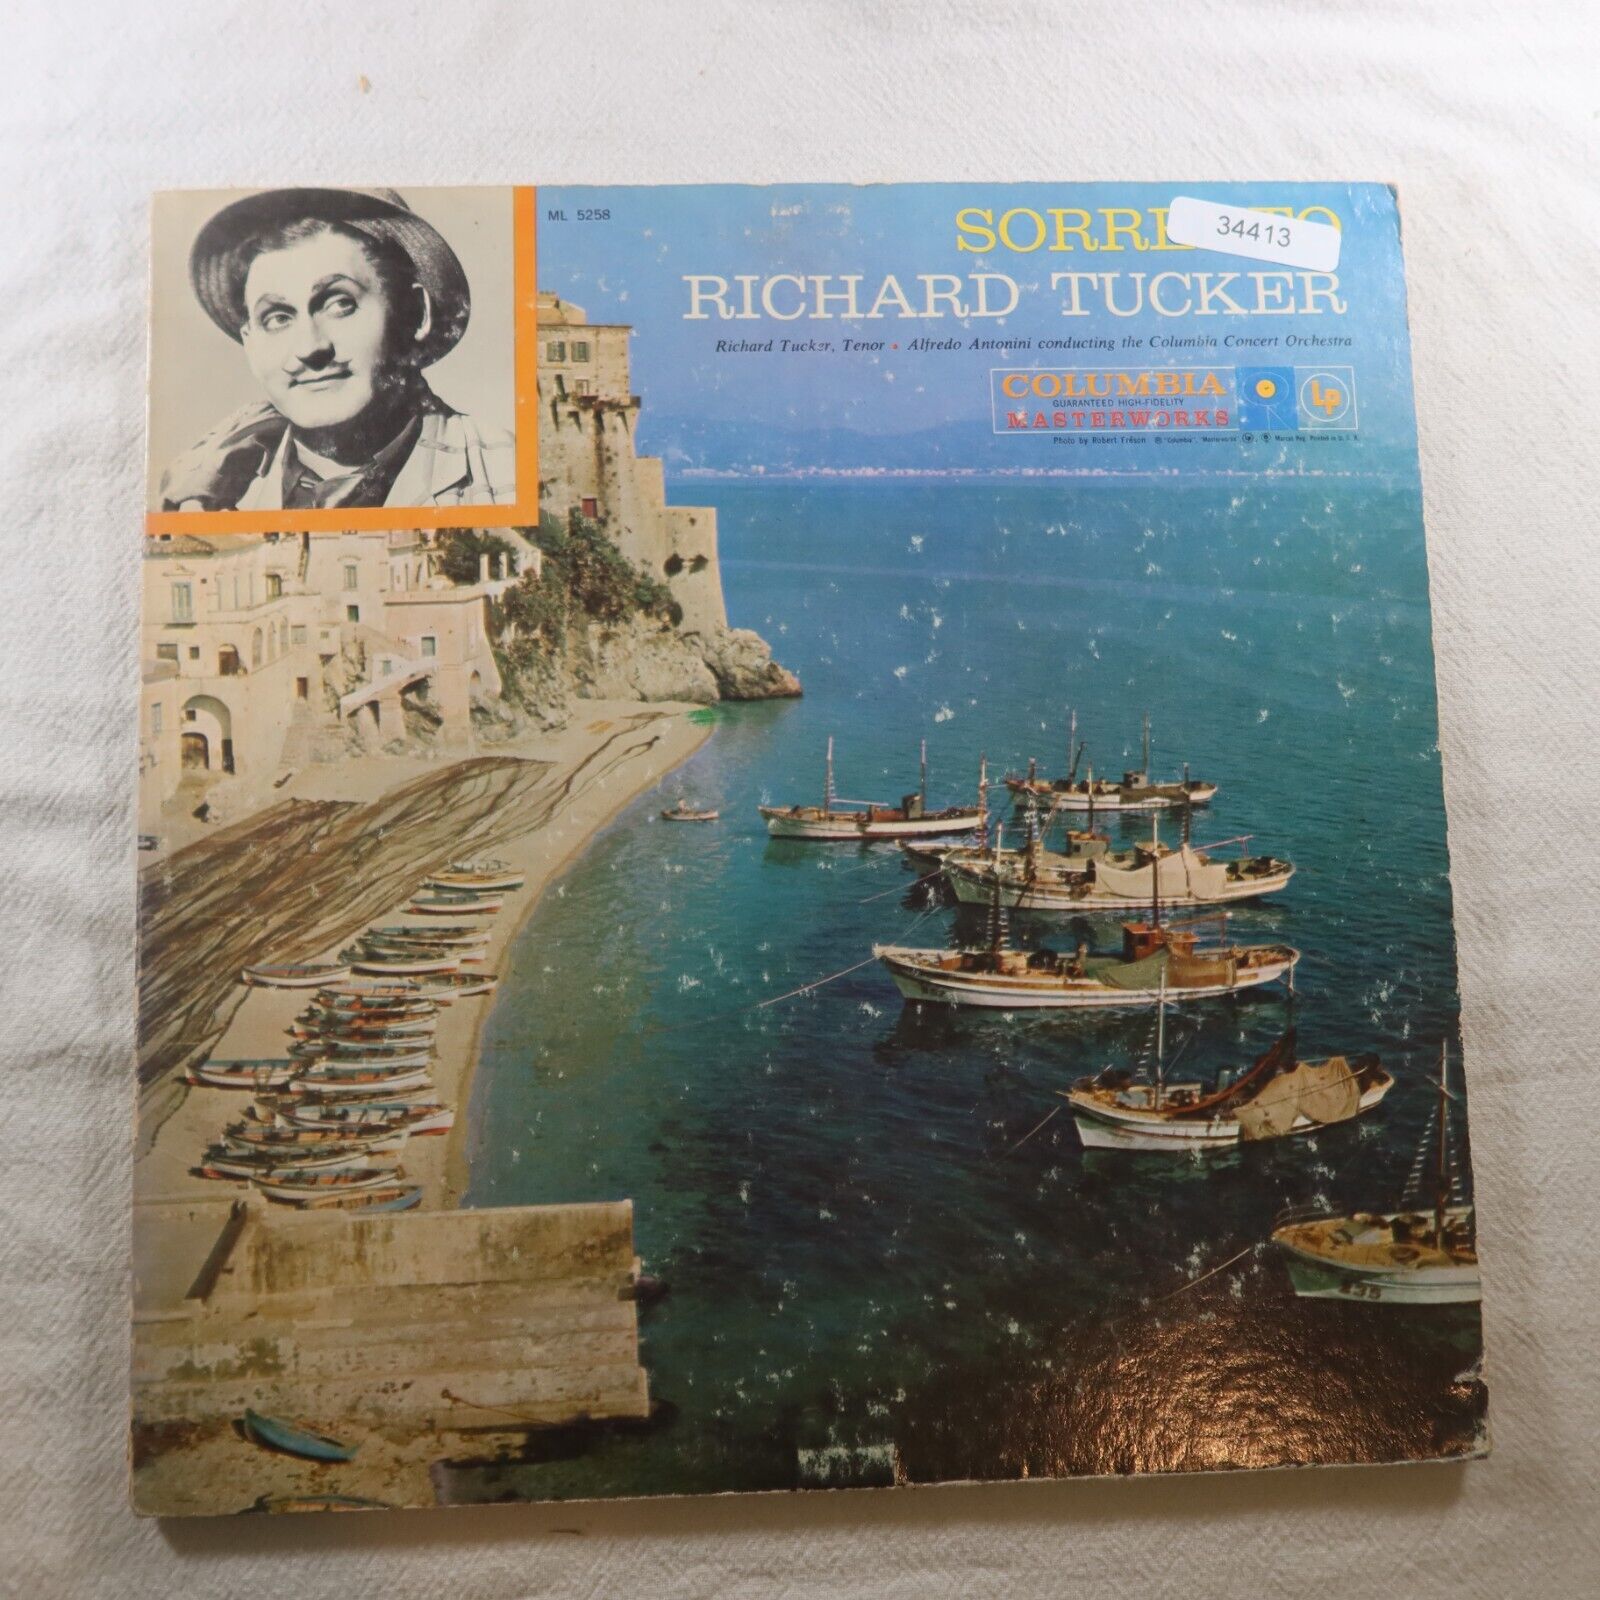 Richard Tucker Sorrento LP Vinyl Record Album